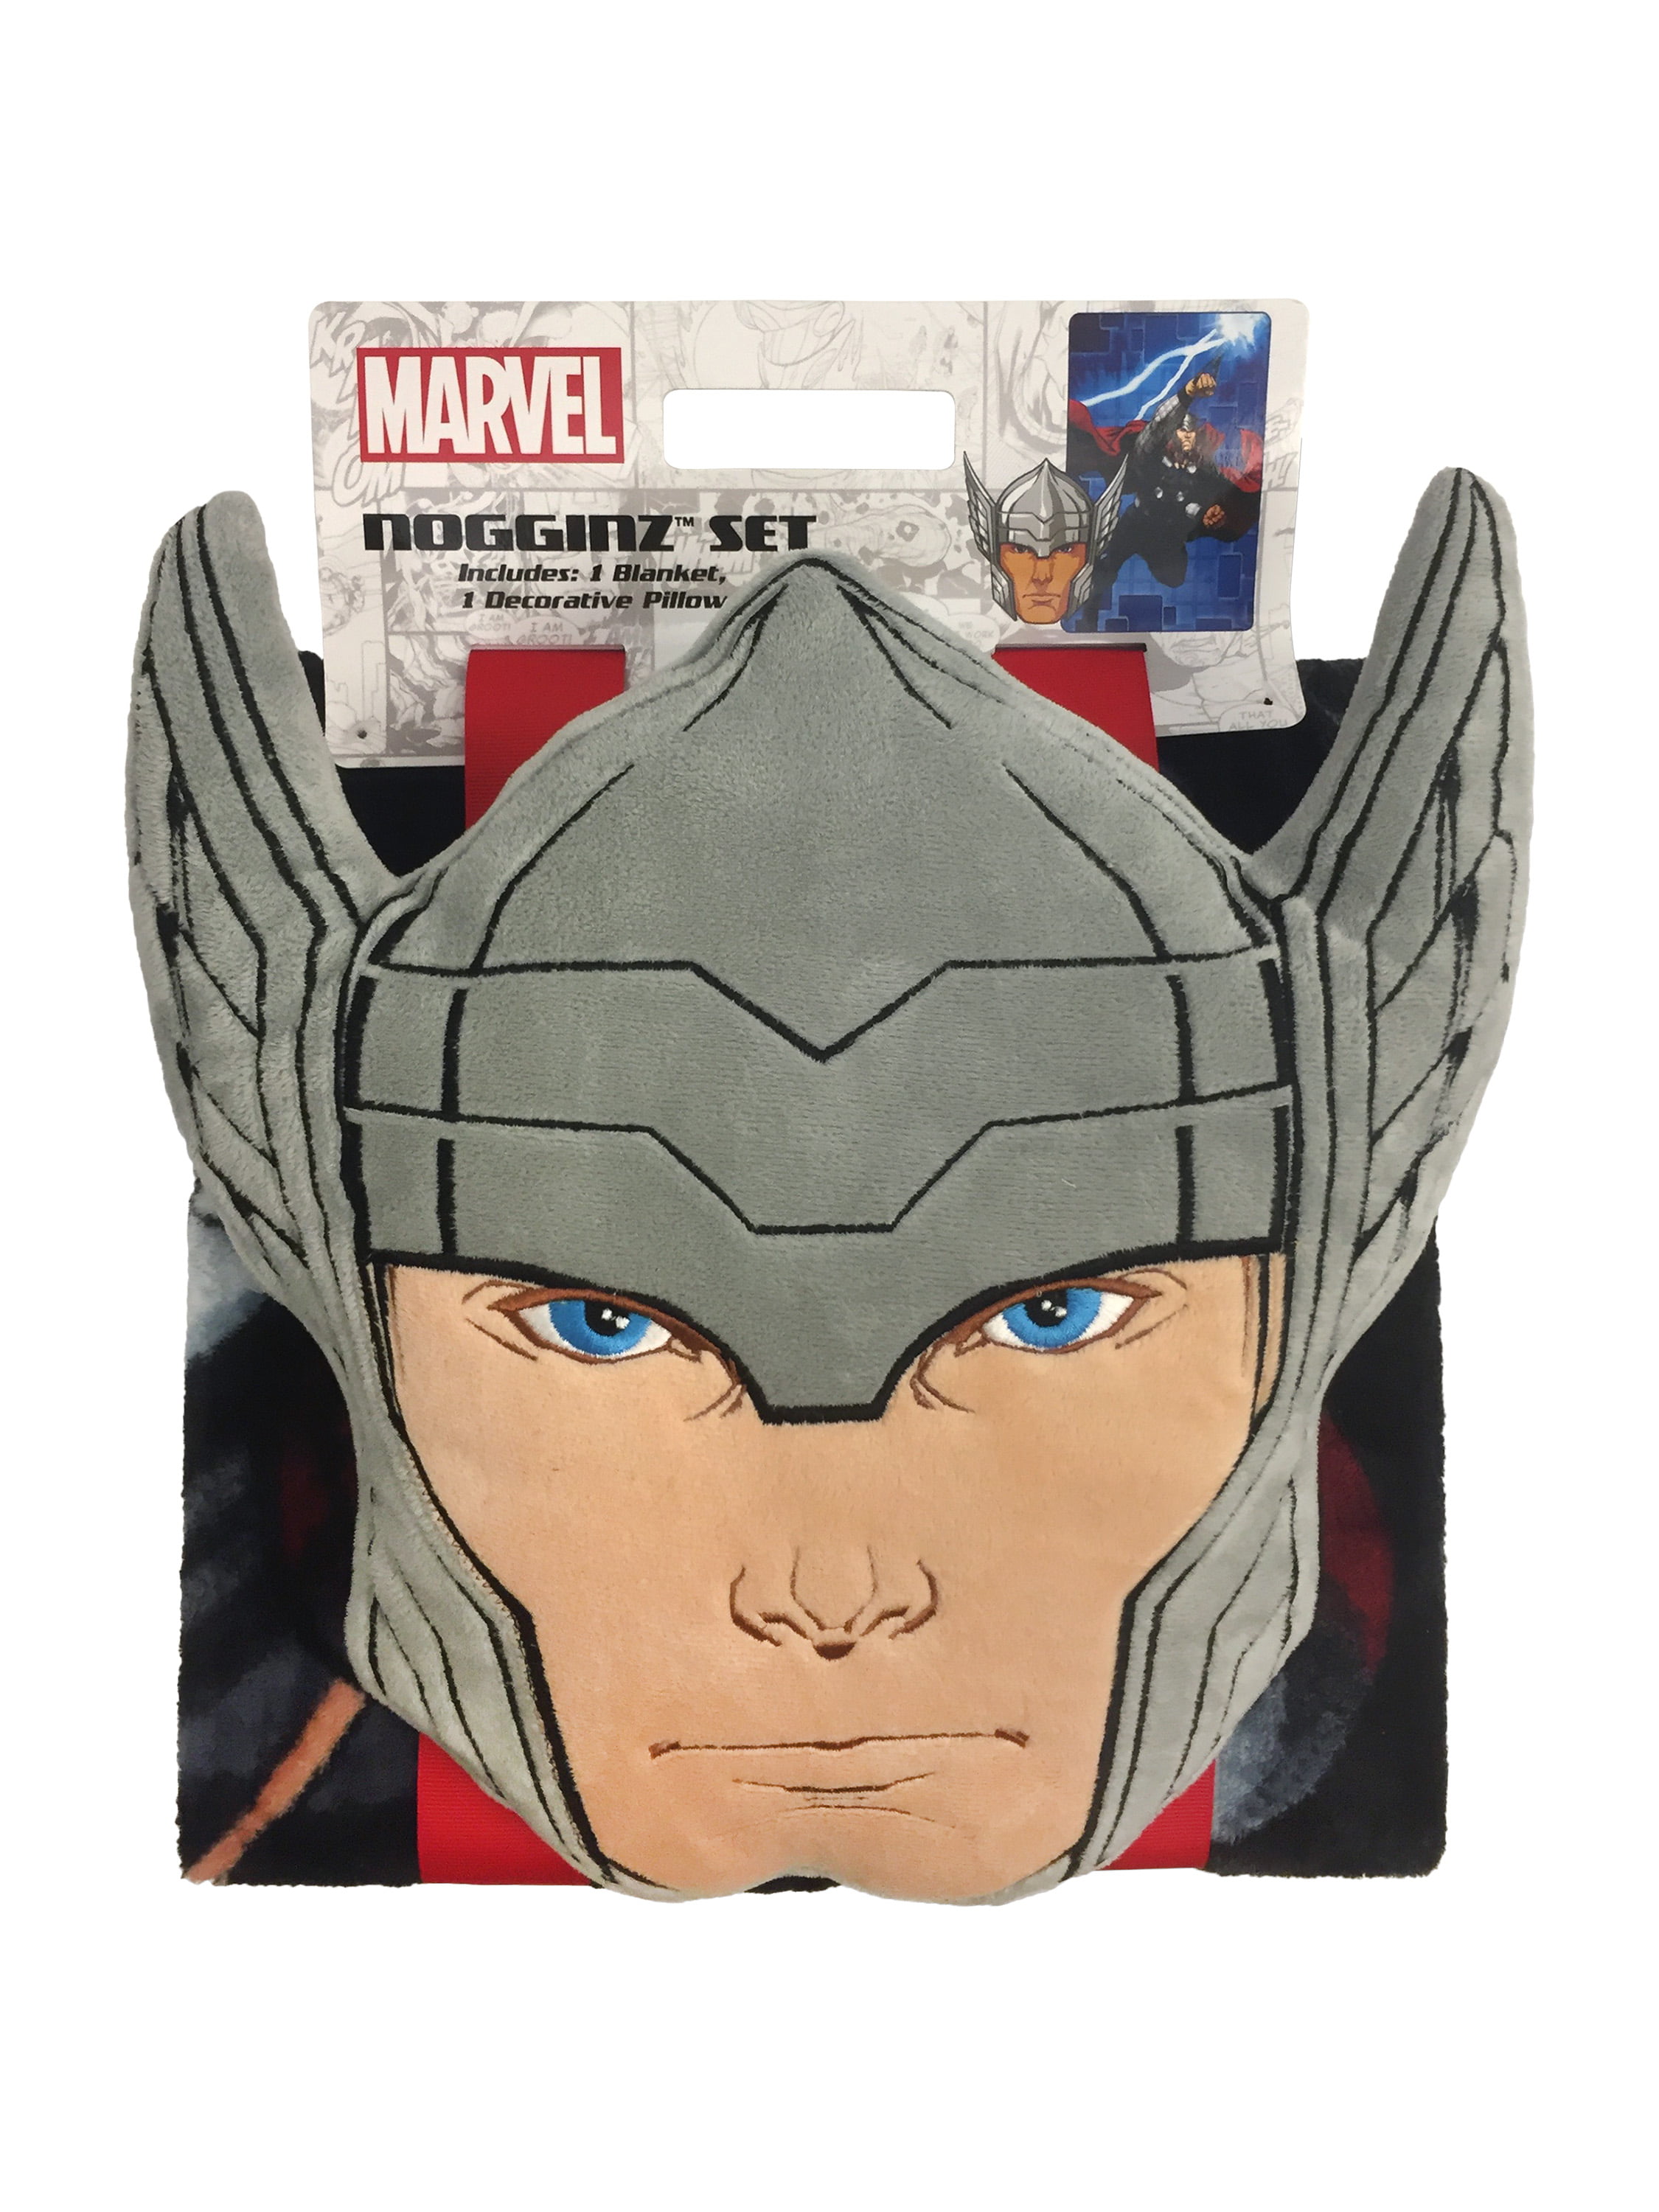 Avengers Thor Nogginz Marvel Pillow and Blanket Set Super Soft 60" x 90" 